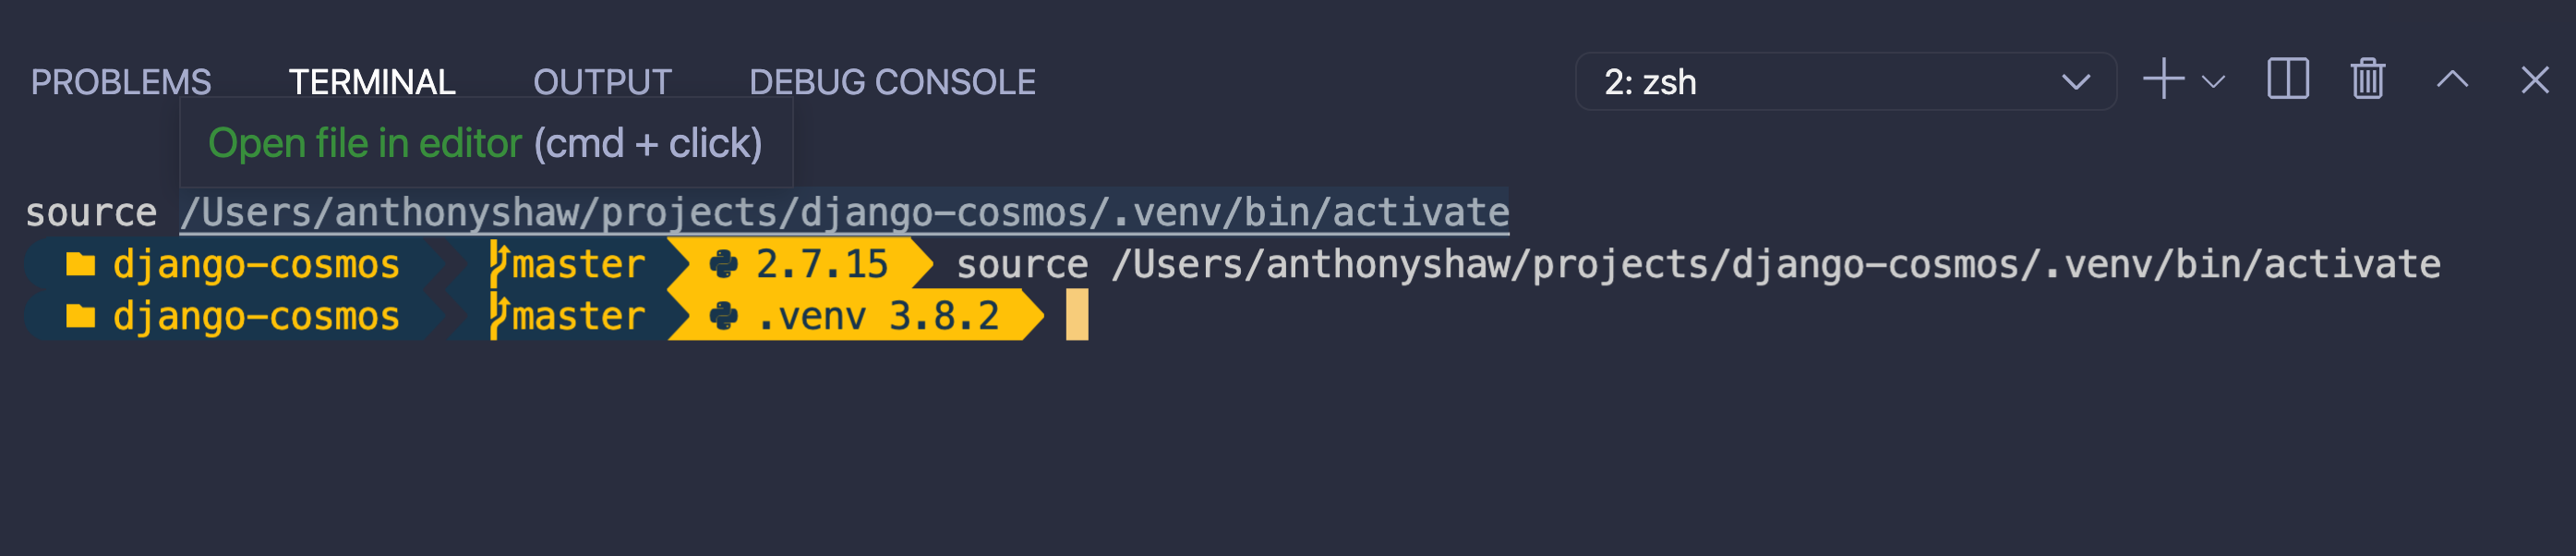 VS Code Terminal with ohmyposh